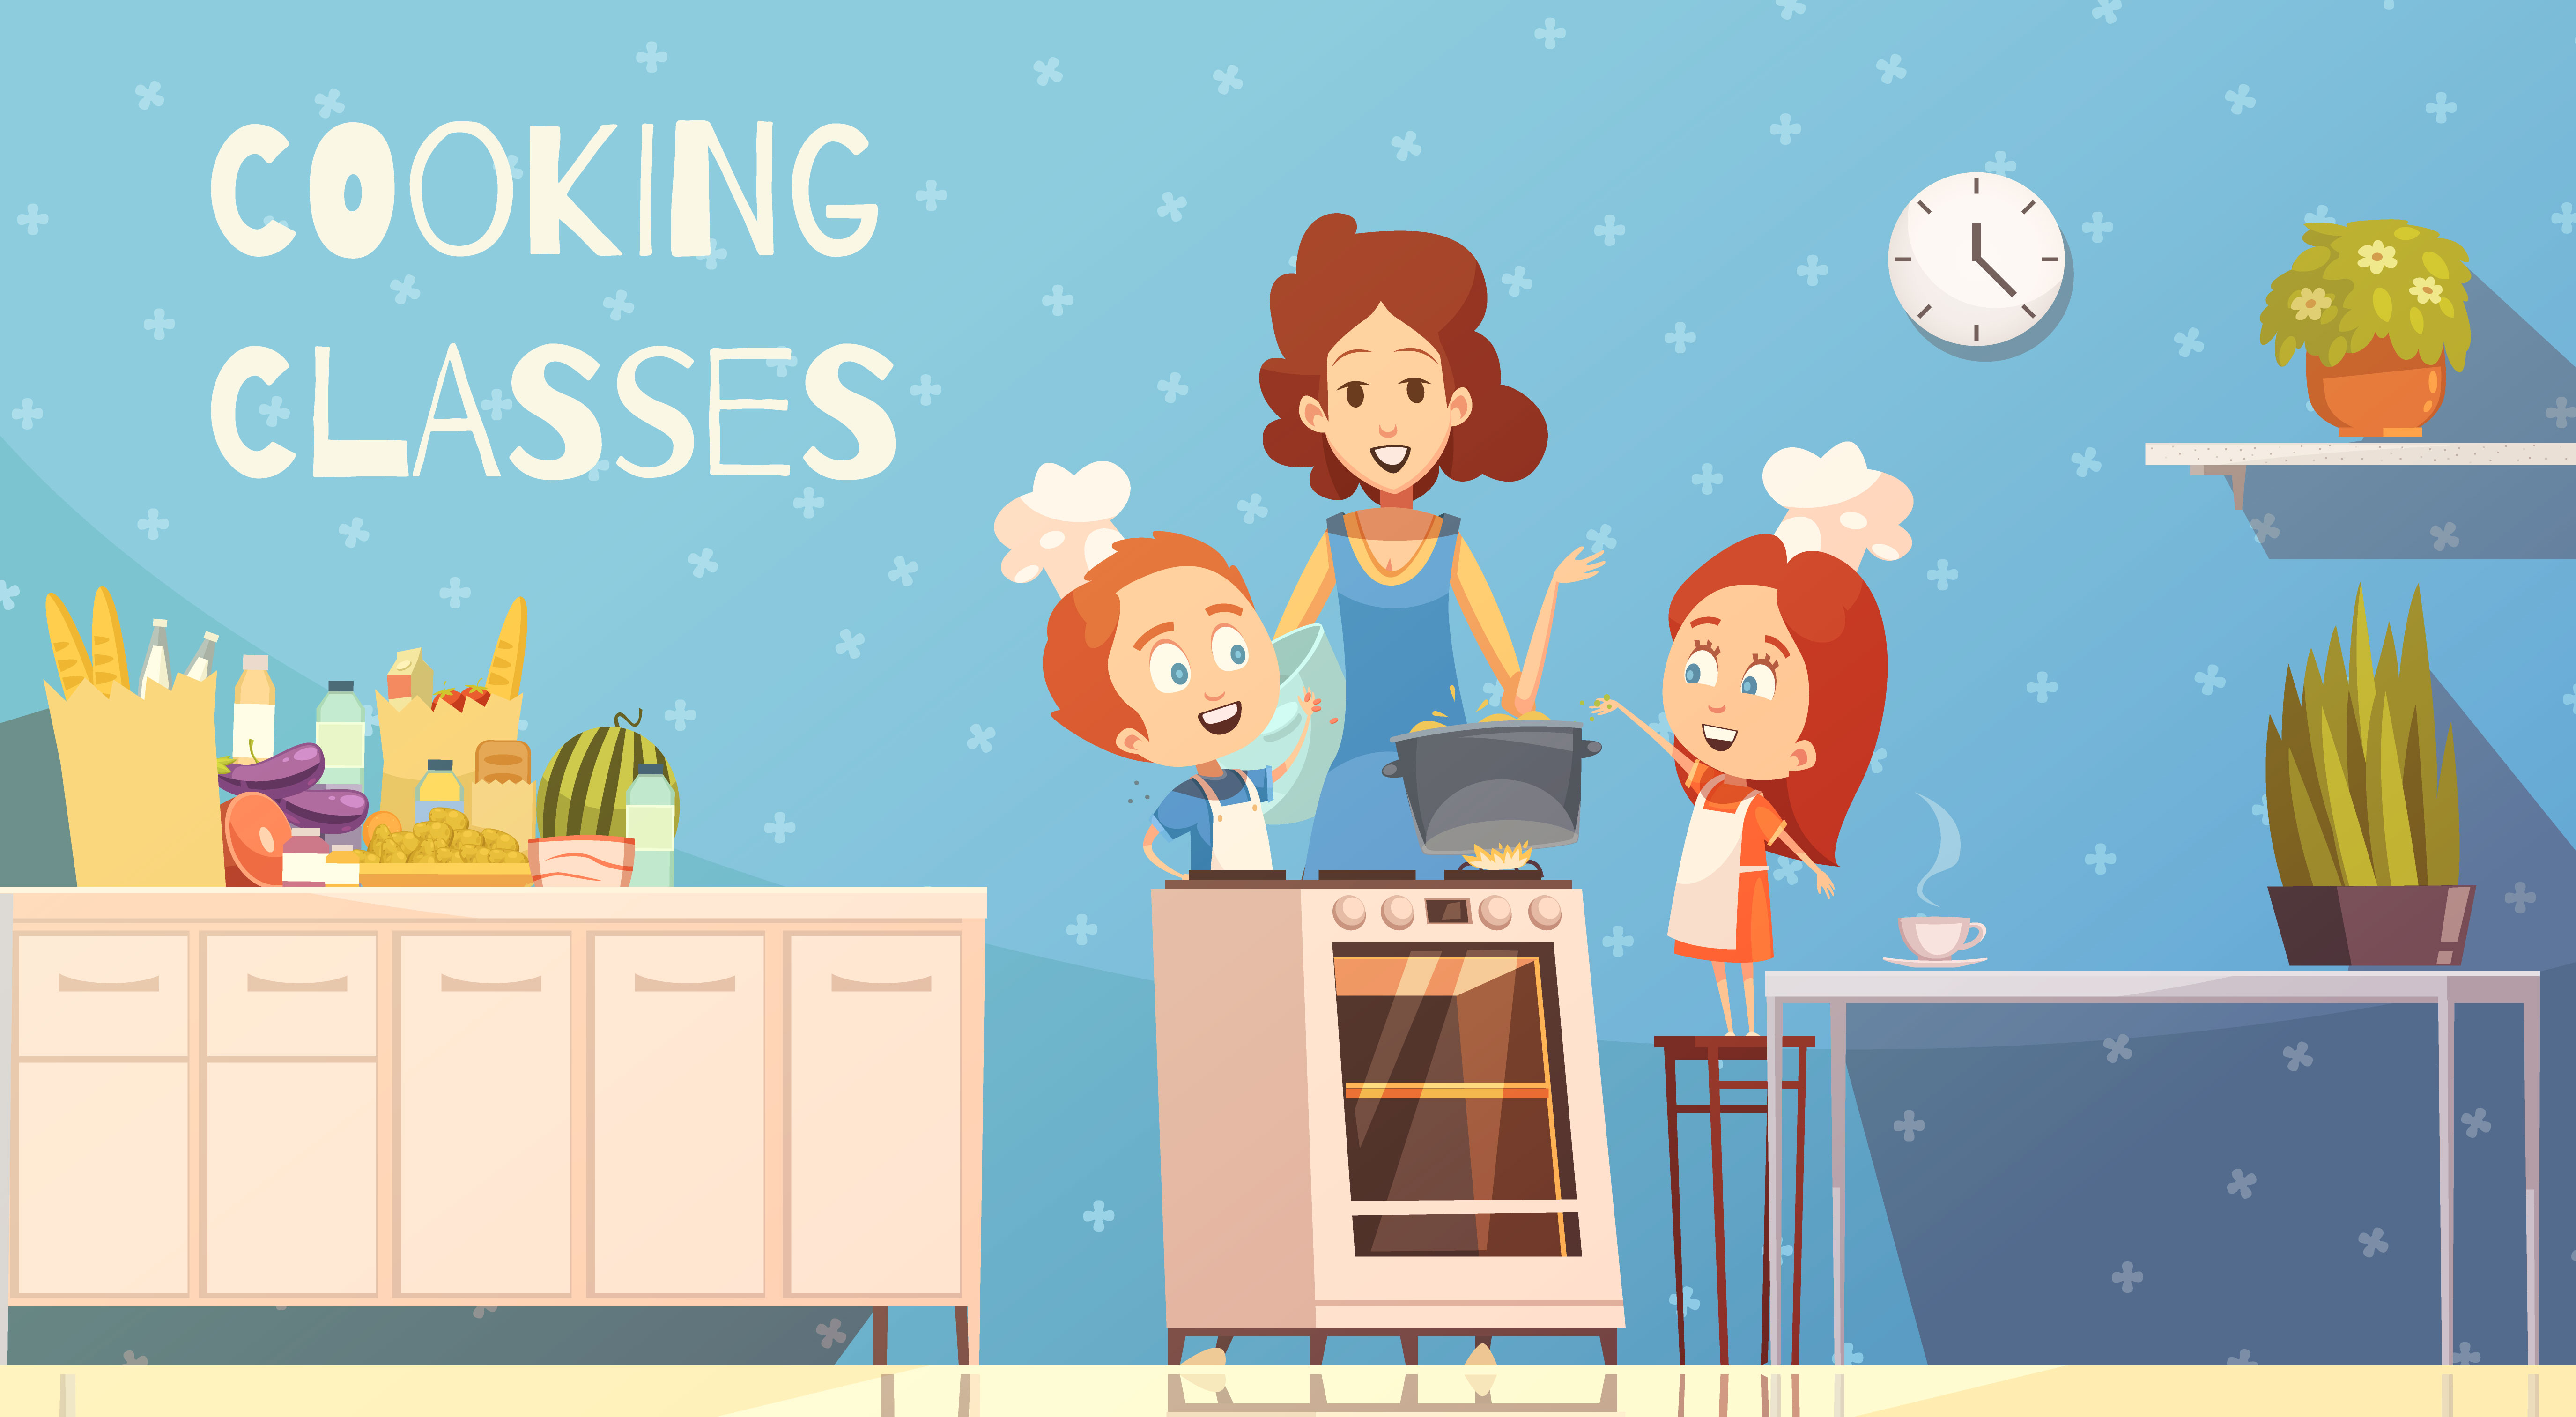 Cooking Classes For Children Vector Illustration